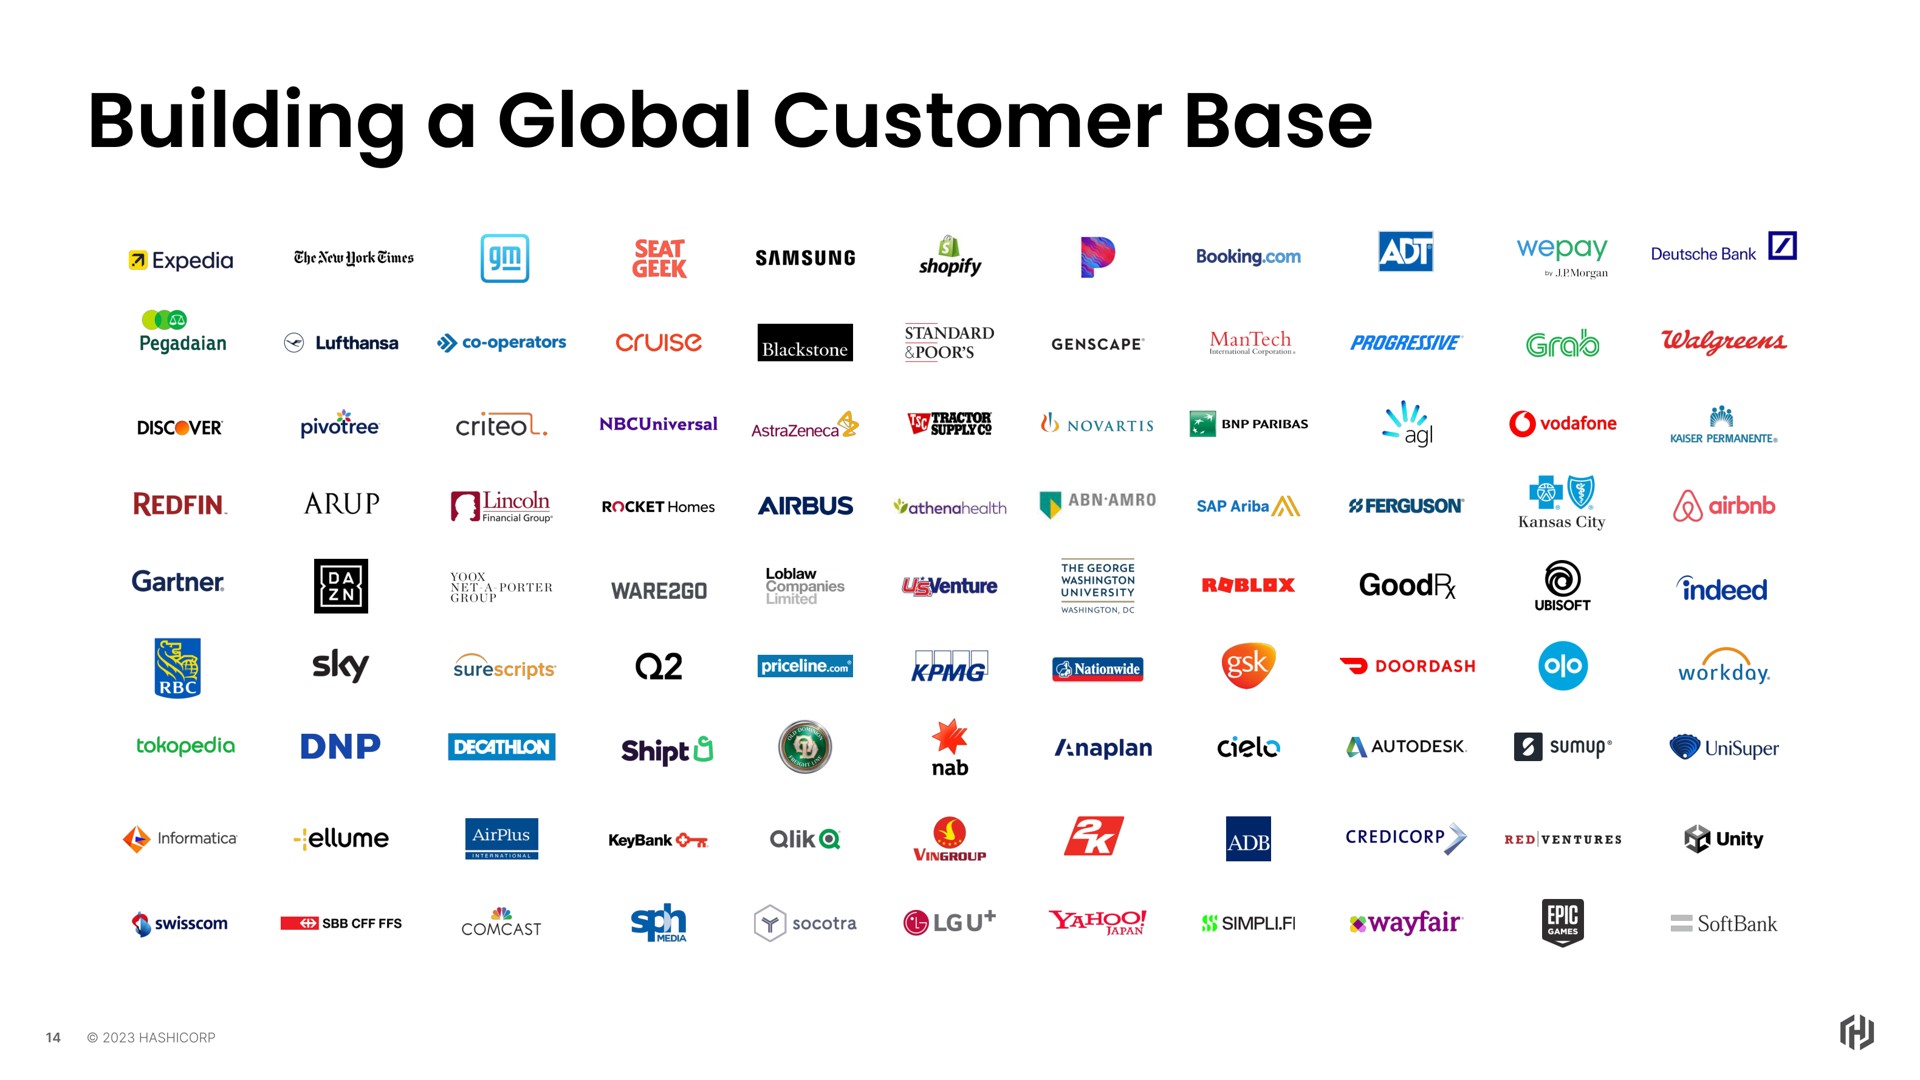 building a global customer base | HashiCorp